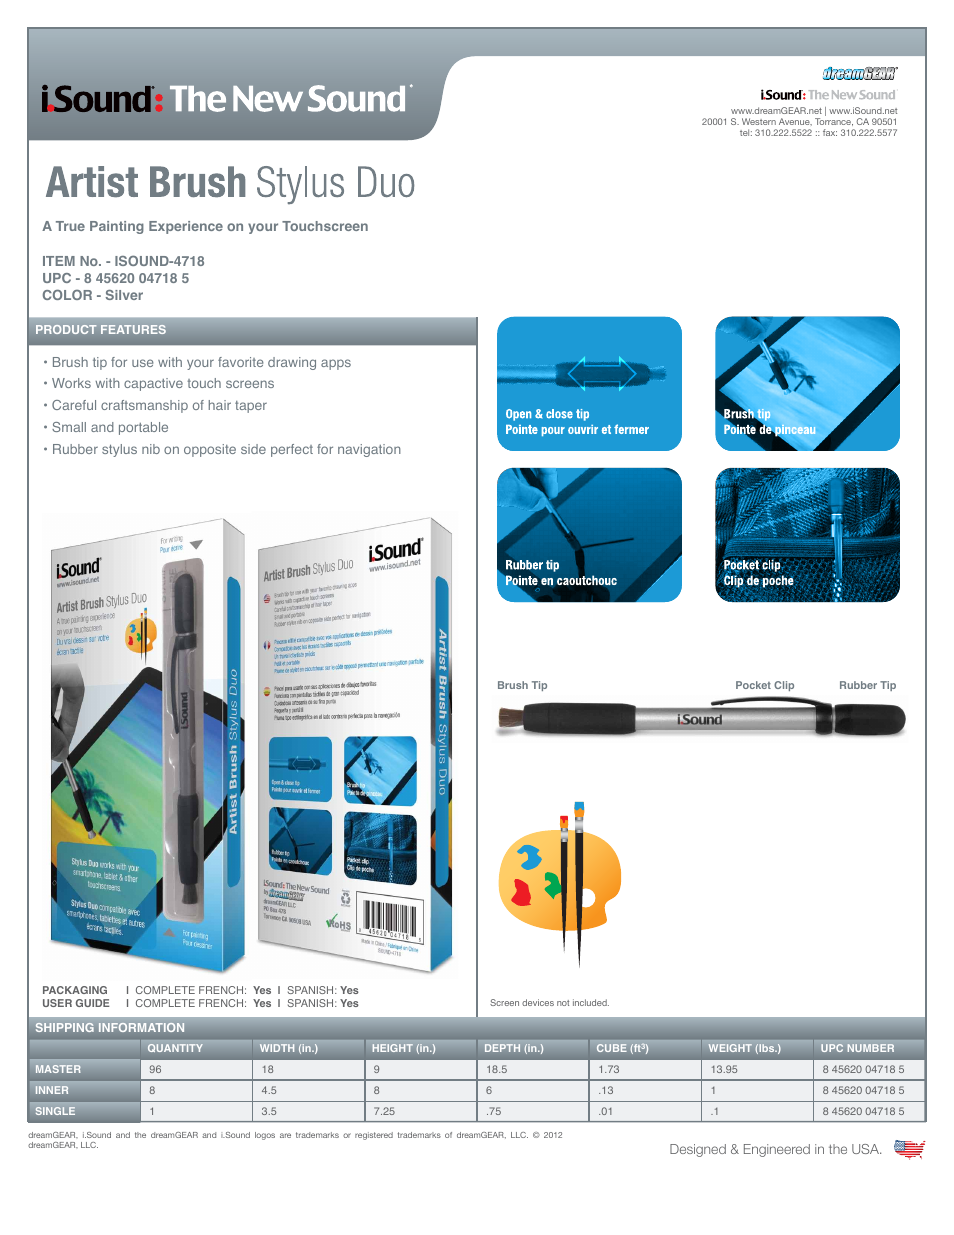 Artist Brush Stylus Duo - Sell Sheet